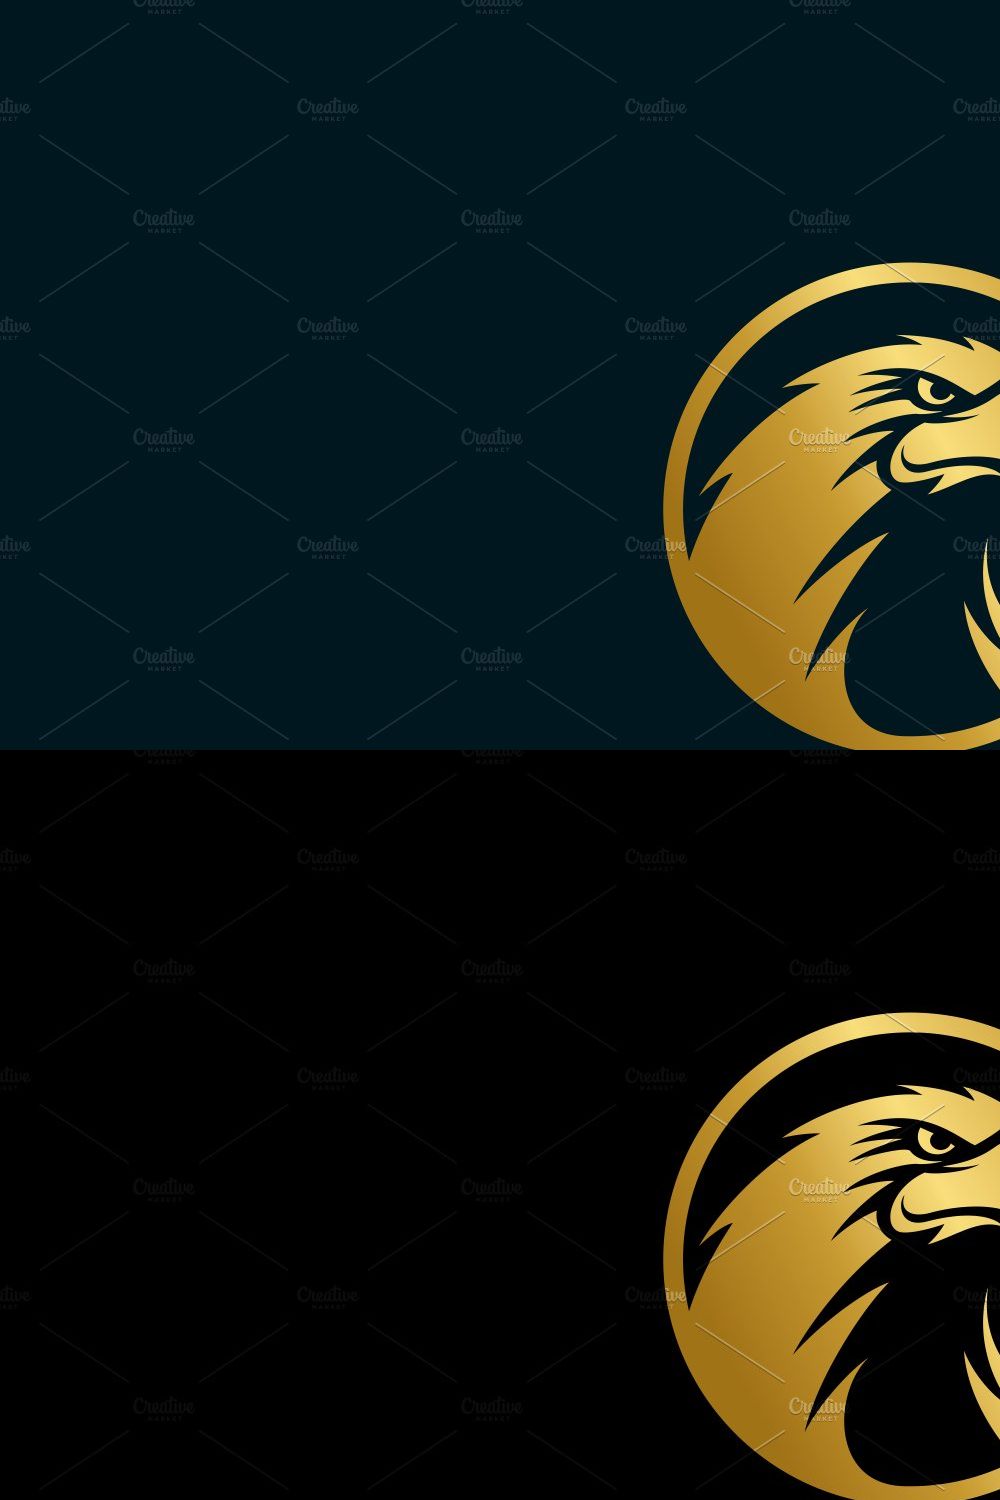 Hawk Logo pinterest preview image.